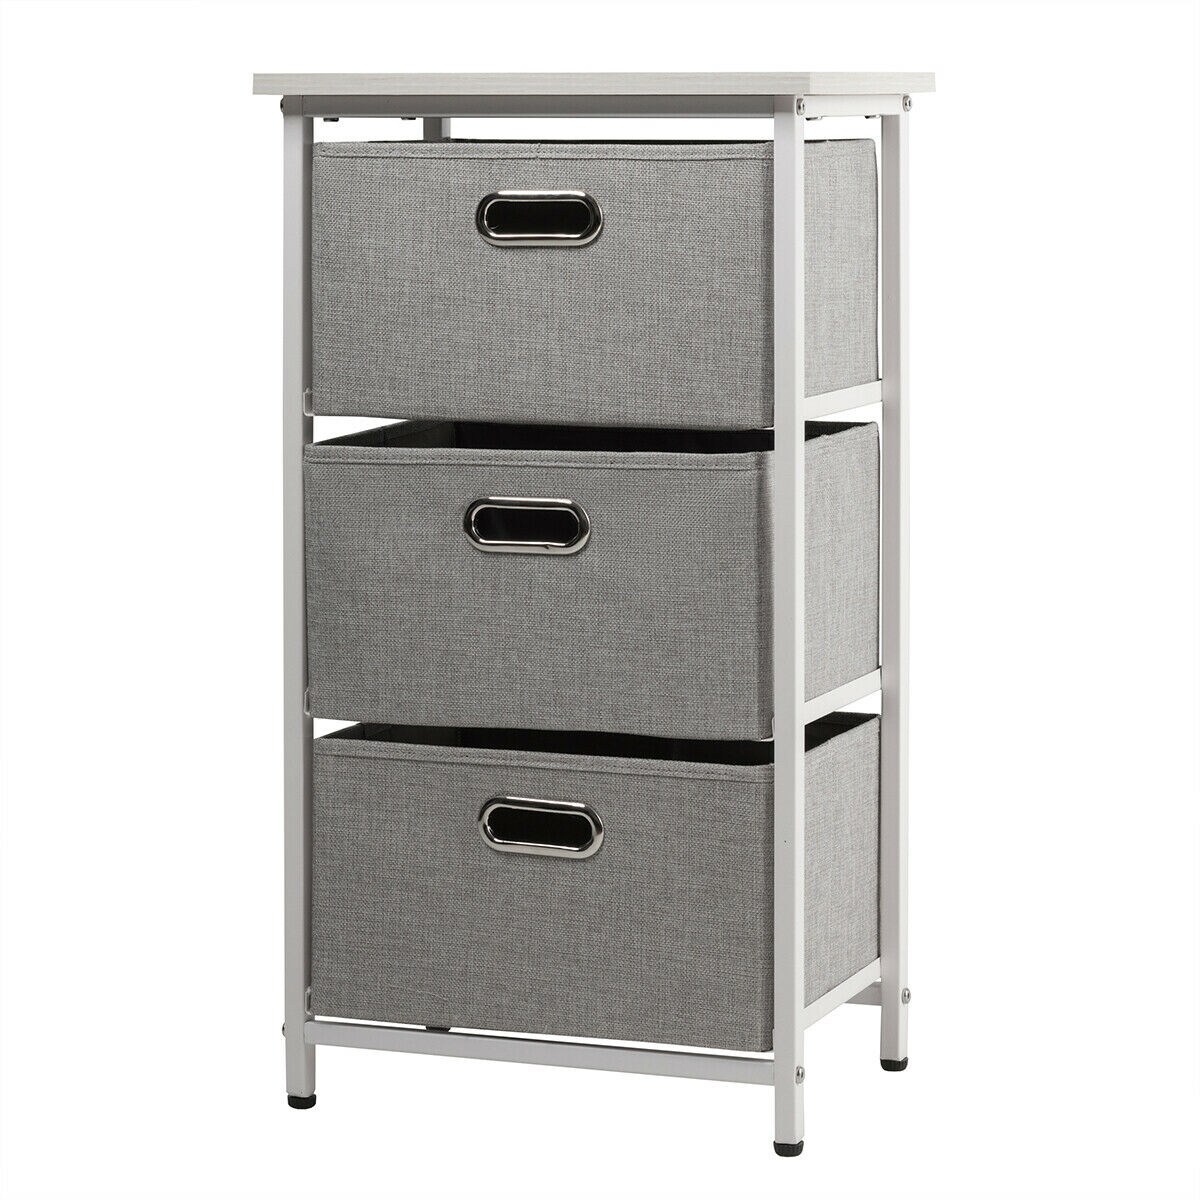 CASAINC Dressers White 3-Drawer Standard Dresser at Lowes.com